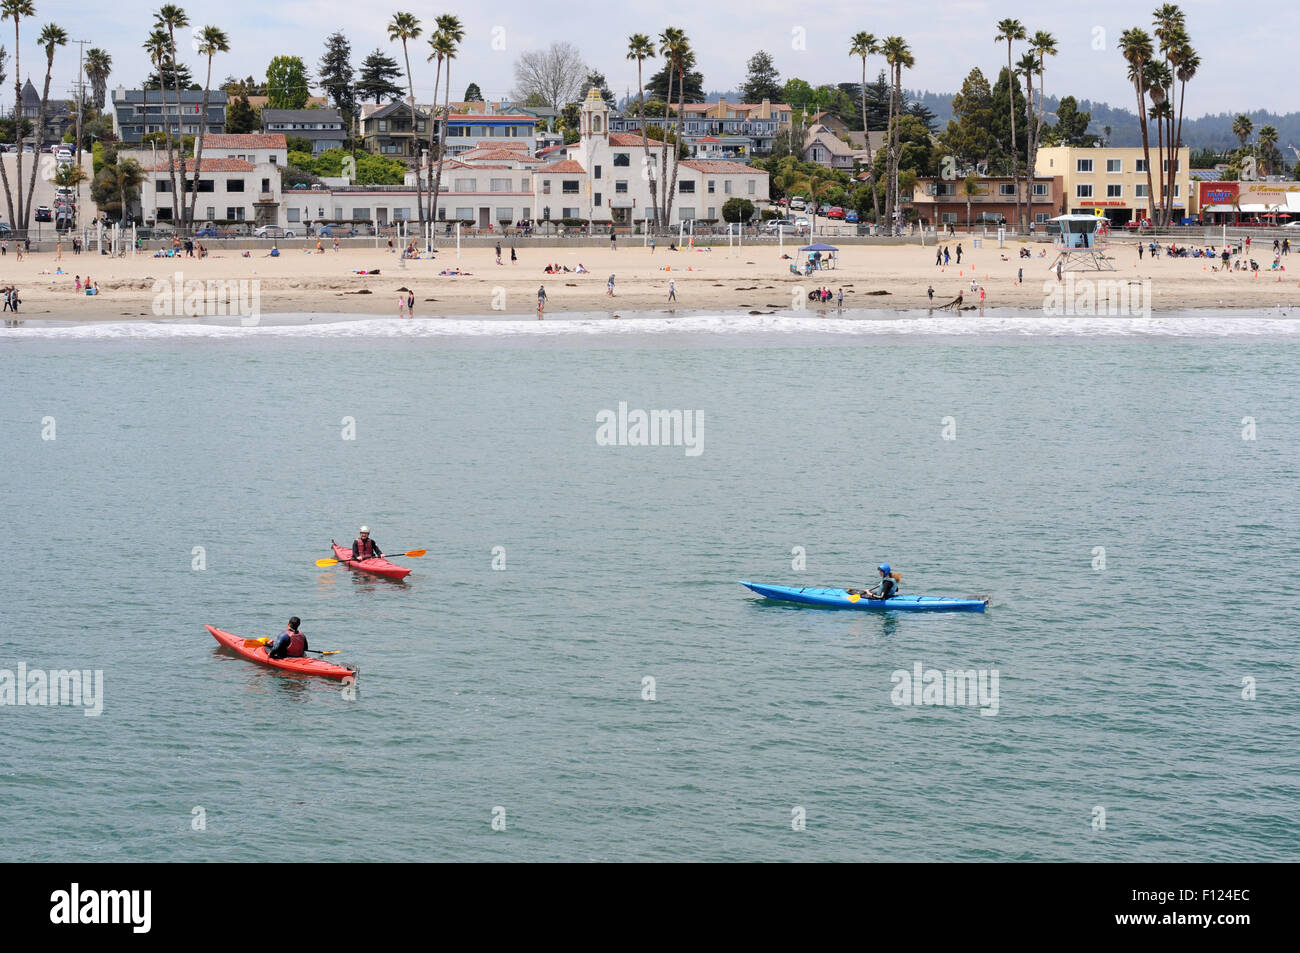 People in kayaks santa cruz california view of main beach Stock Photo